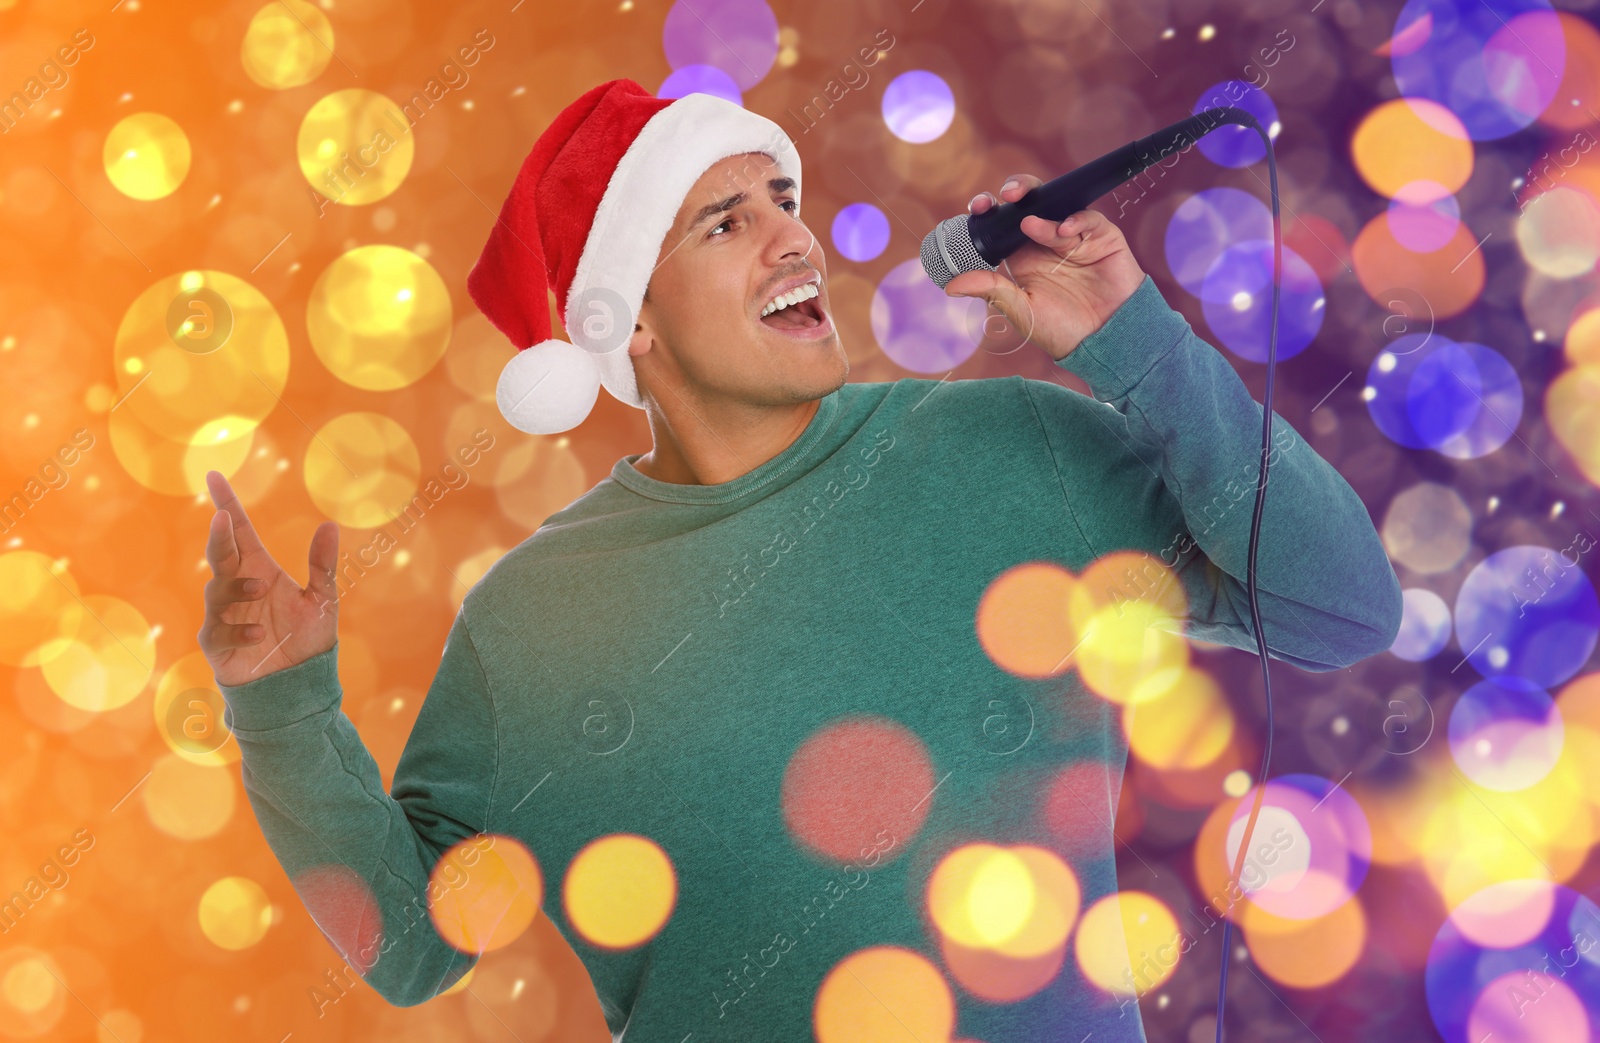 Image of Happy man in Santa hat singing on bright background, bokeh effect